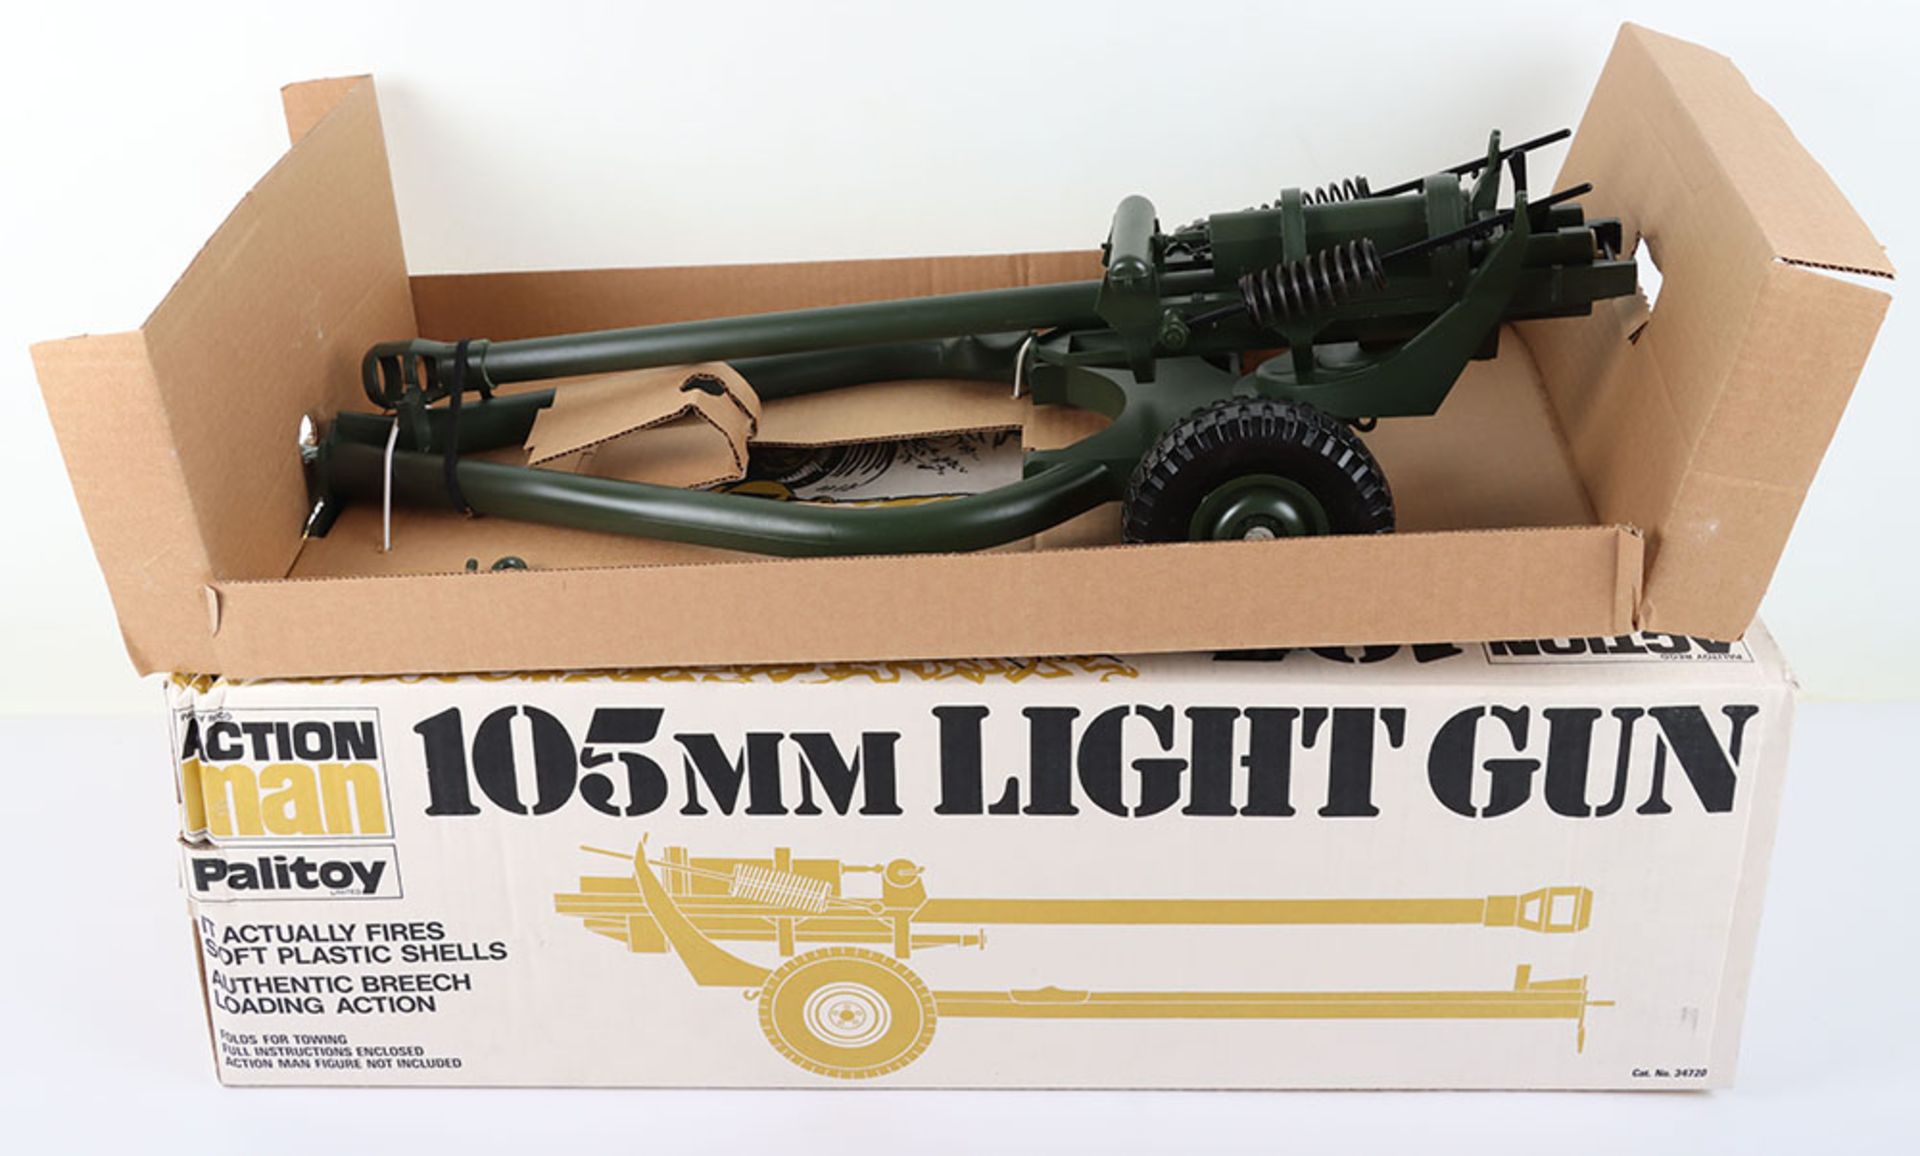 Palitoy Action Man 105mm Light Gun